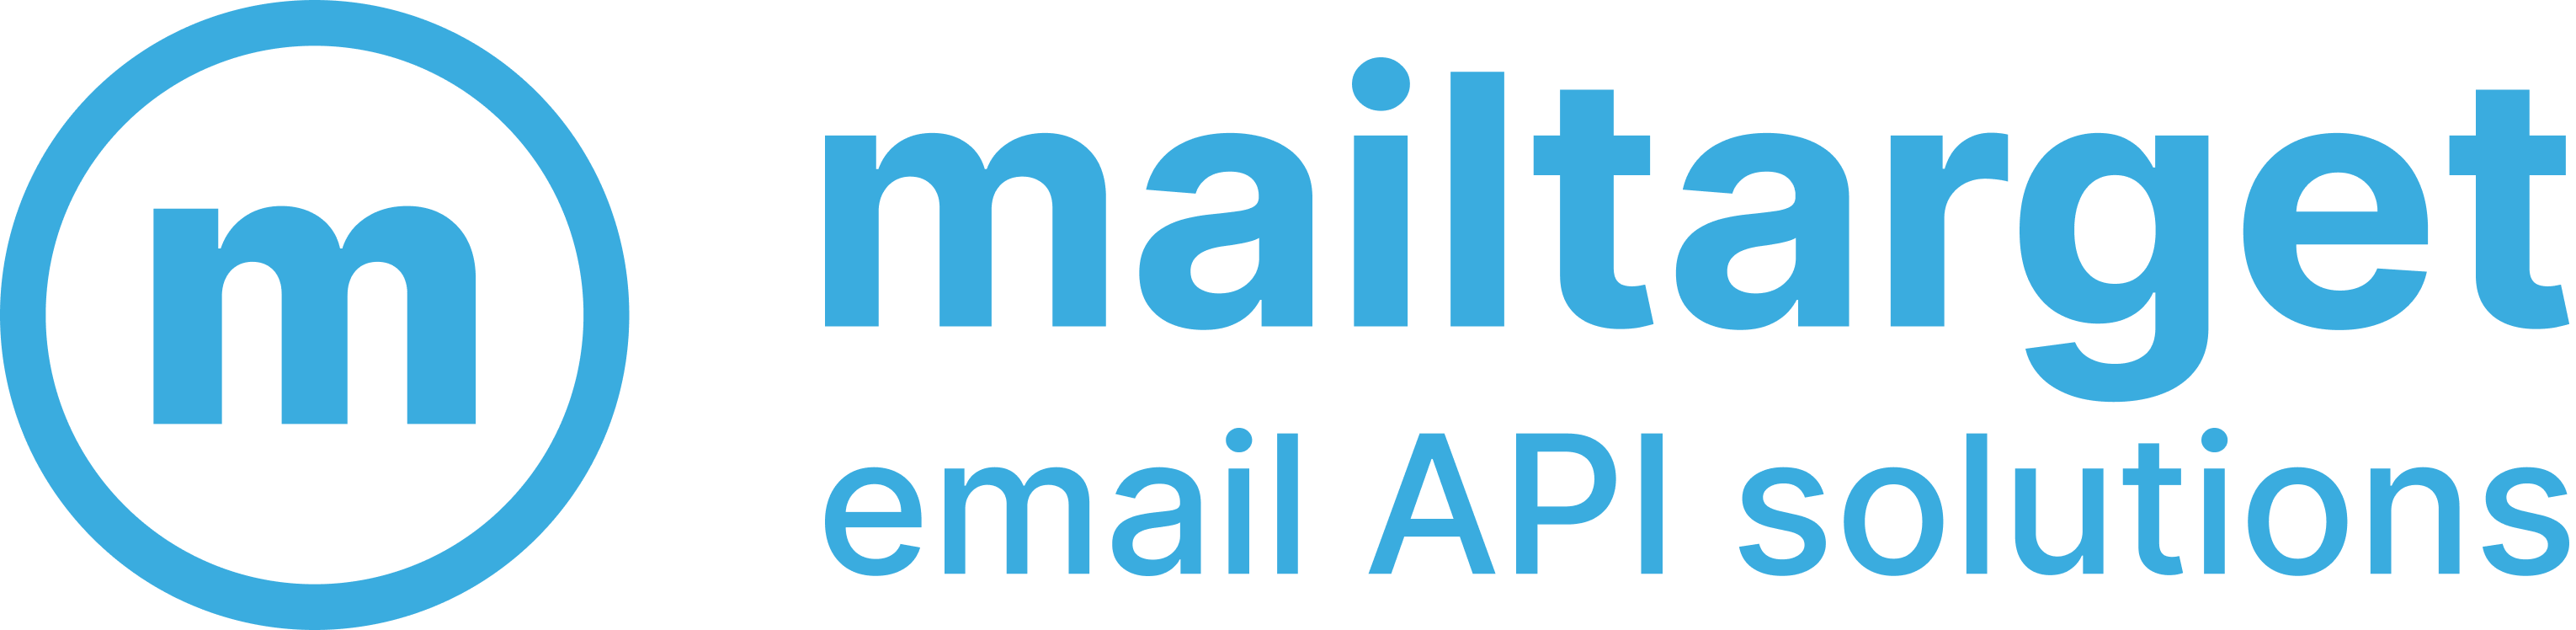 Email Deliverability Insights | mailtarget Blog